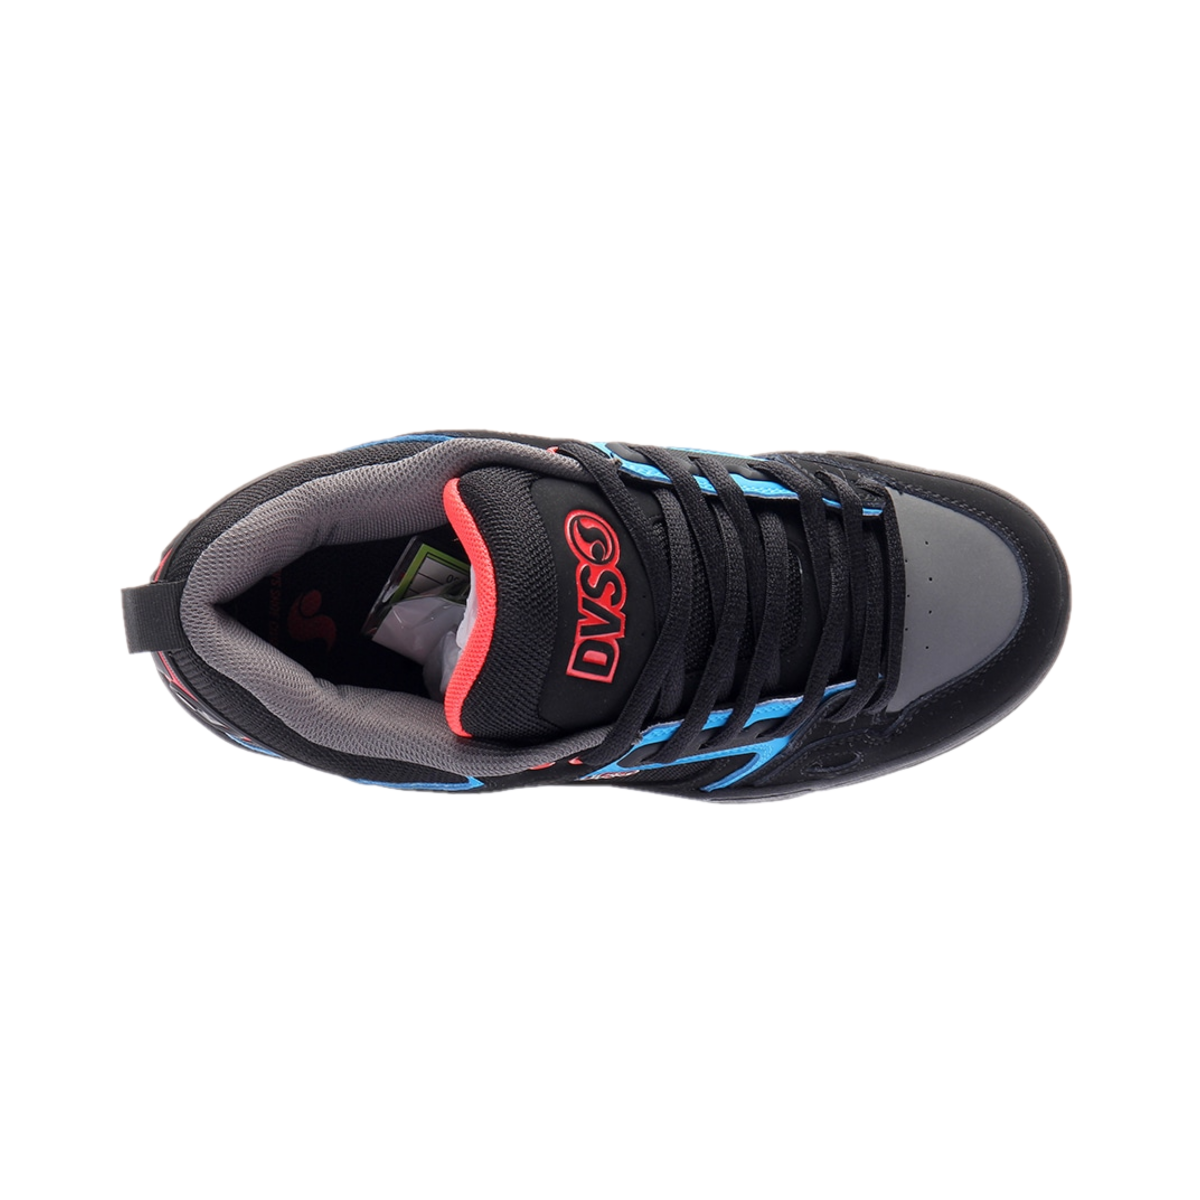 DVS F0000029702 COMANCHE MN'S (Medium) Black/Blue/Red Leather & Nubuck Skate Shoes